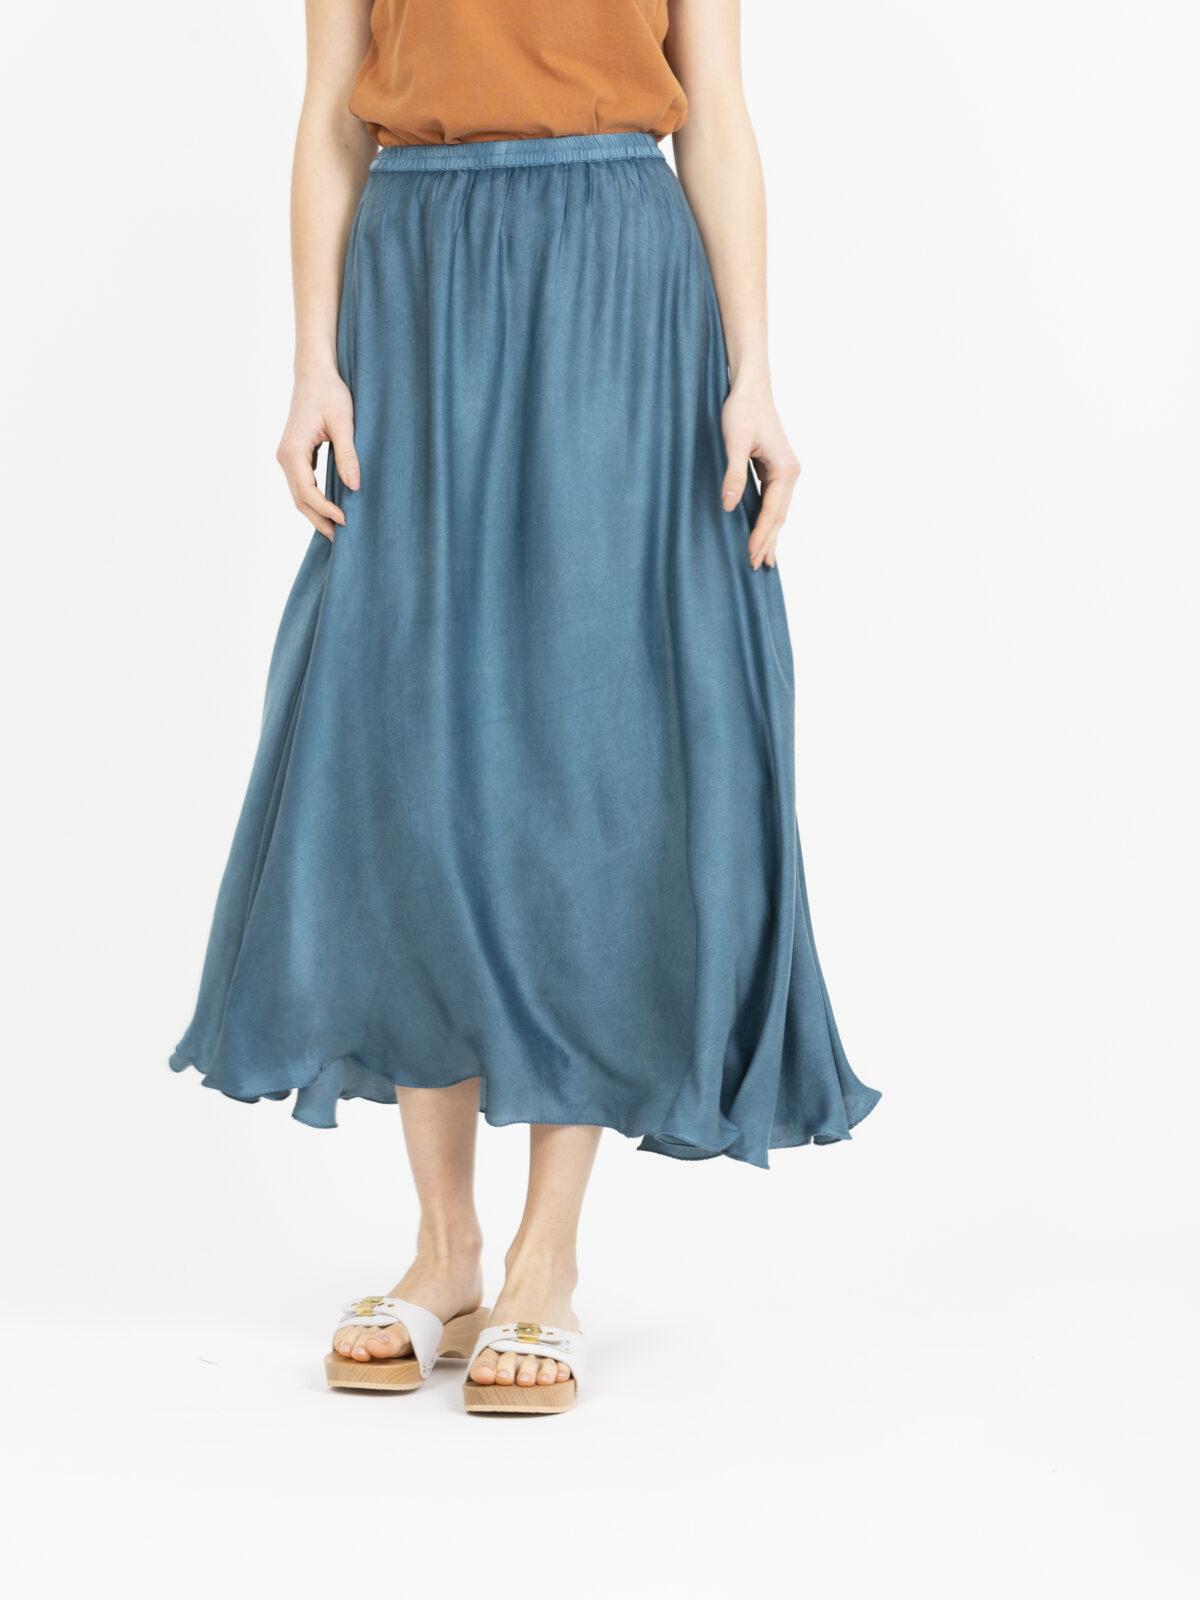 ashton-blue-skirt-cotton-elasticated-waist-mesdemoiselles-matchboxathens